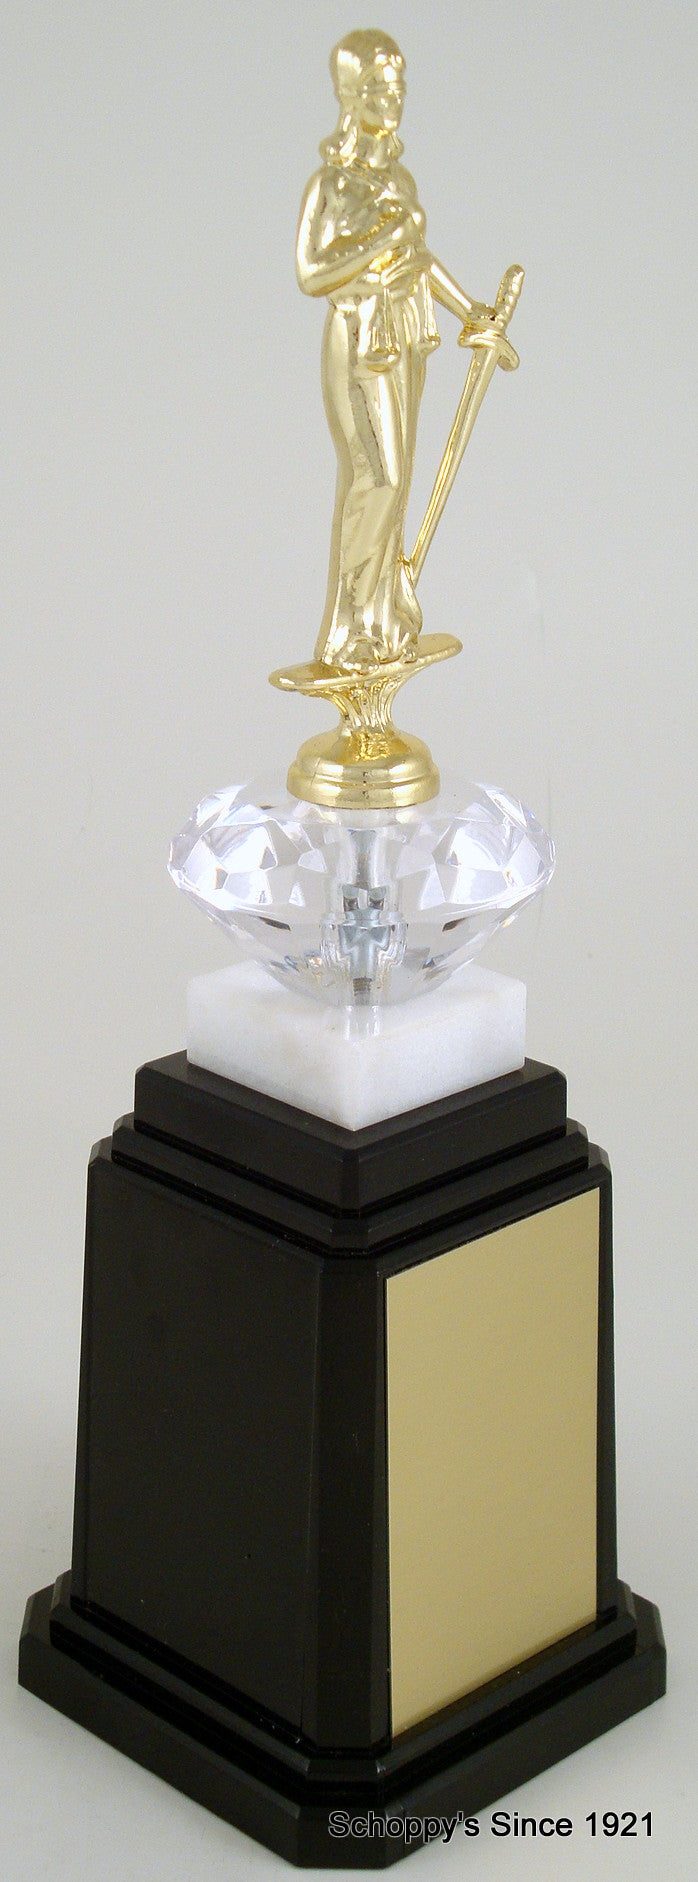 Lady Of Justice Figure Tower Base Trophy-Trophy-Schoppy&